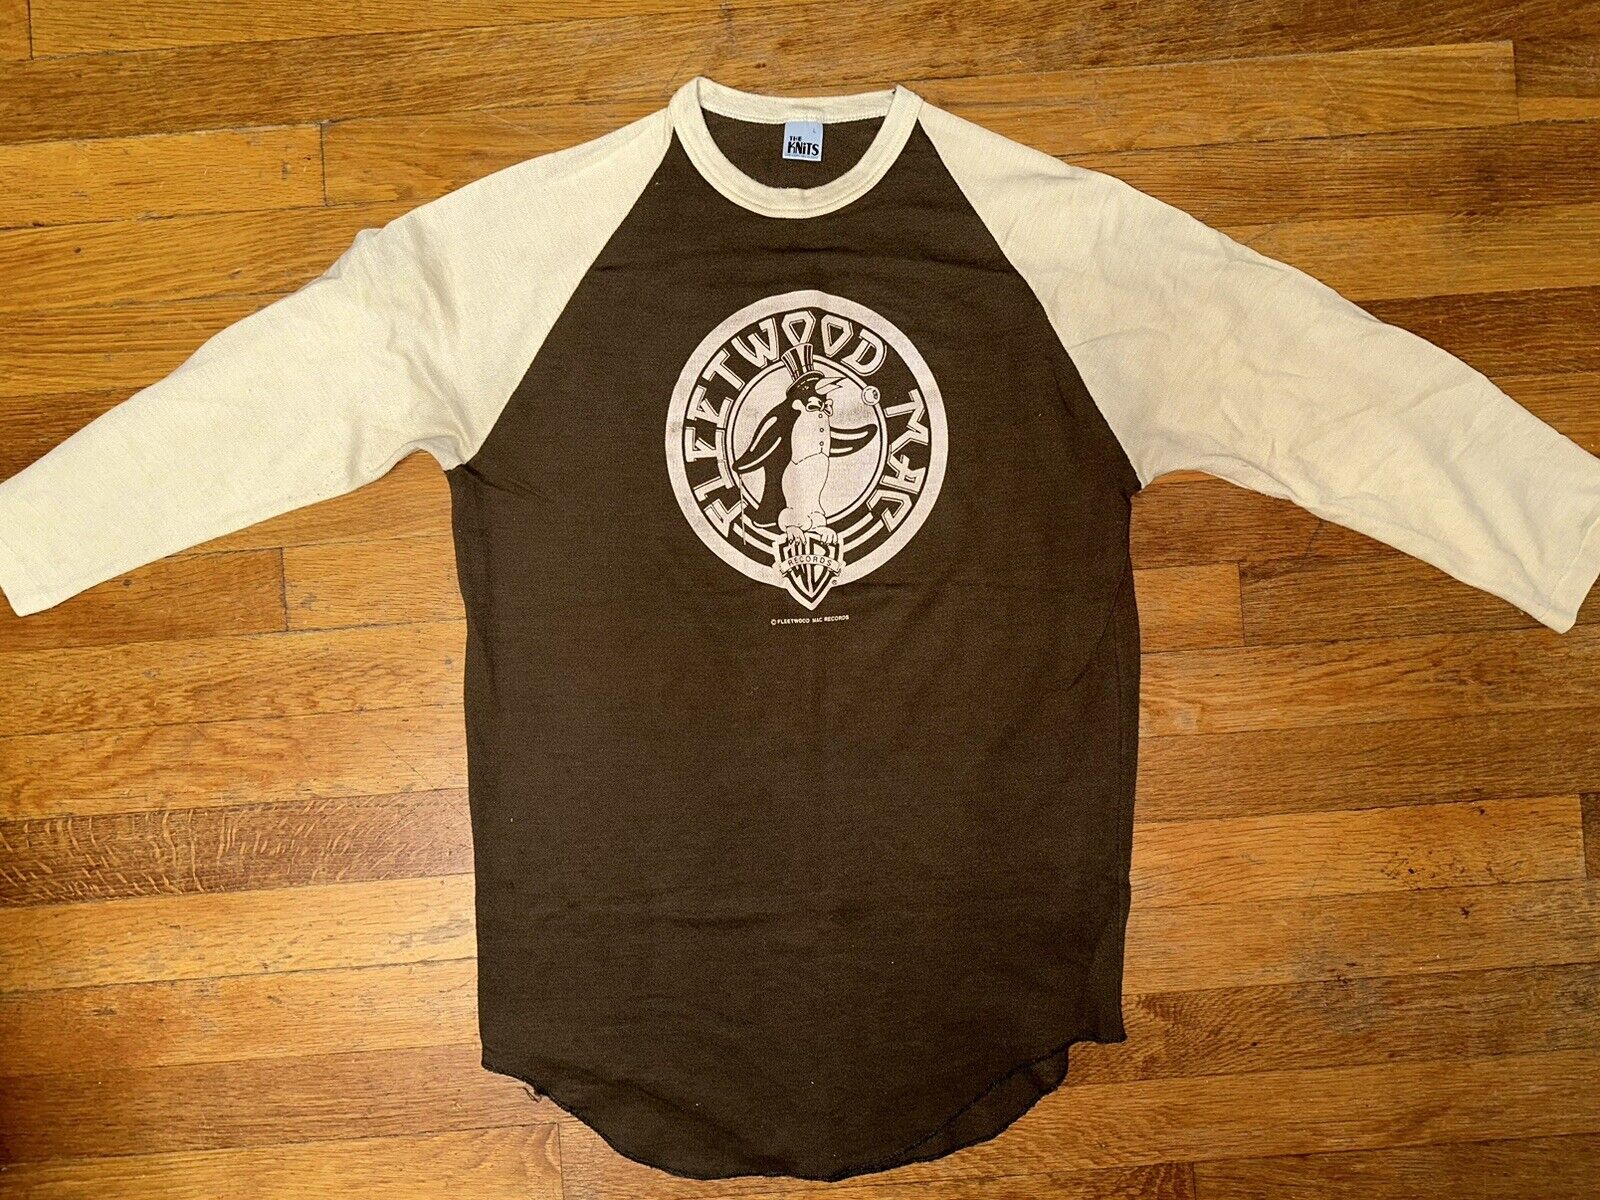 Fleetwood Mac 79-80 Tusk Tour Shirt SUPER RARE